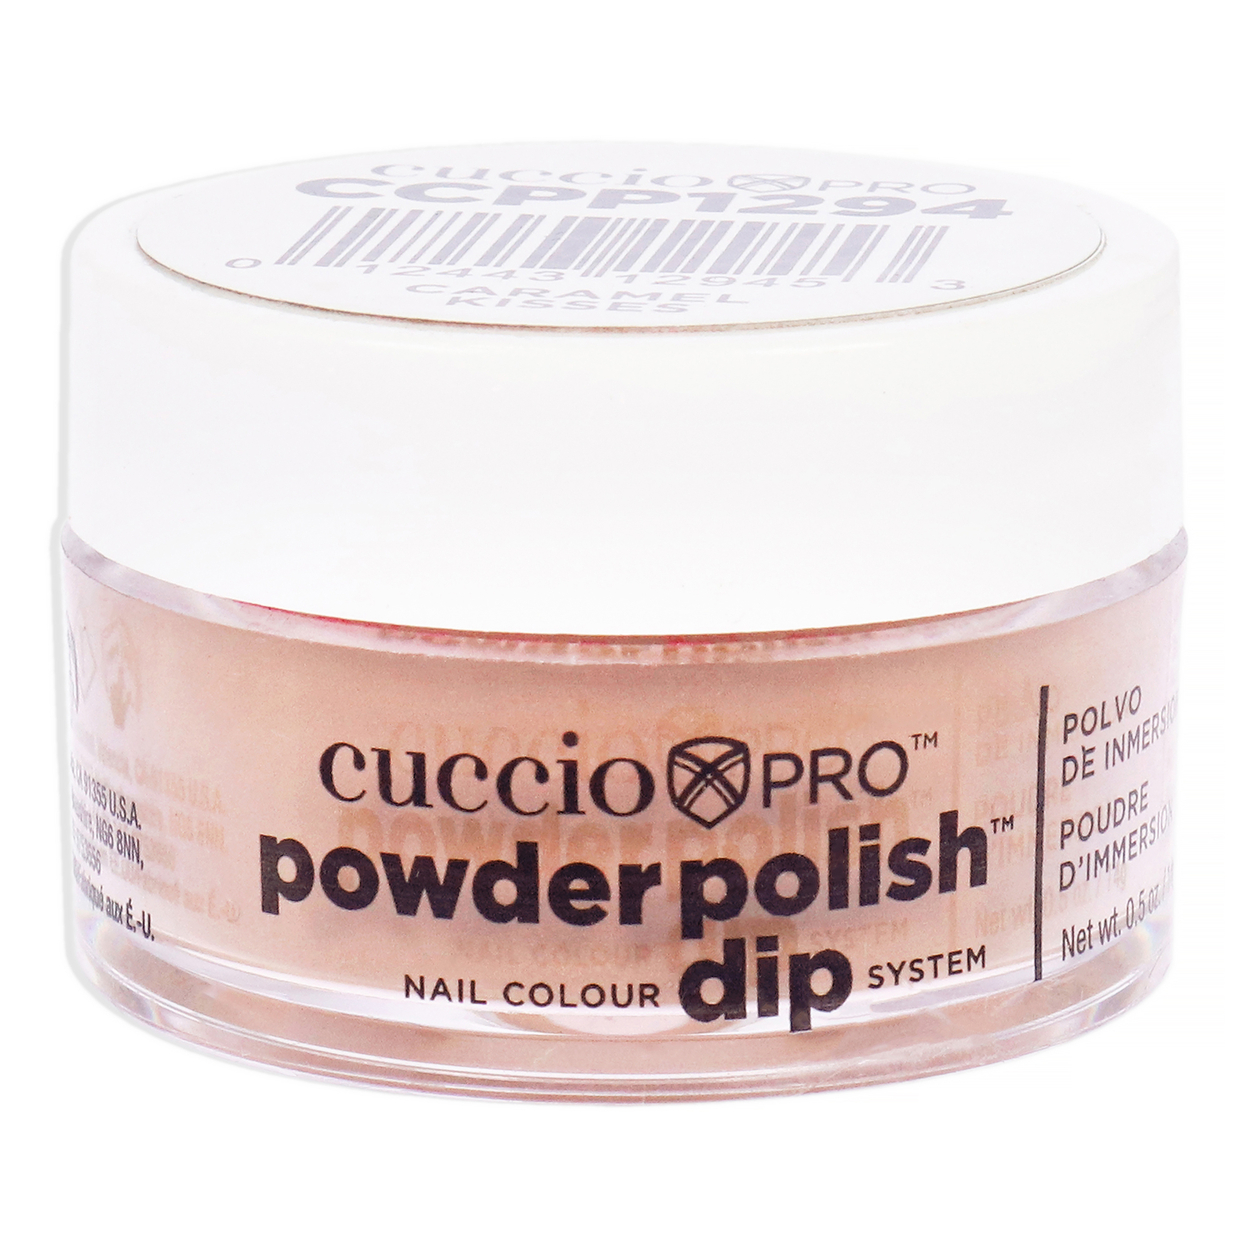 Cuccio Colour Pro Powder Polish Nail Colour Dip System - Caramel Kisses Nail Powder 0.5 Oz